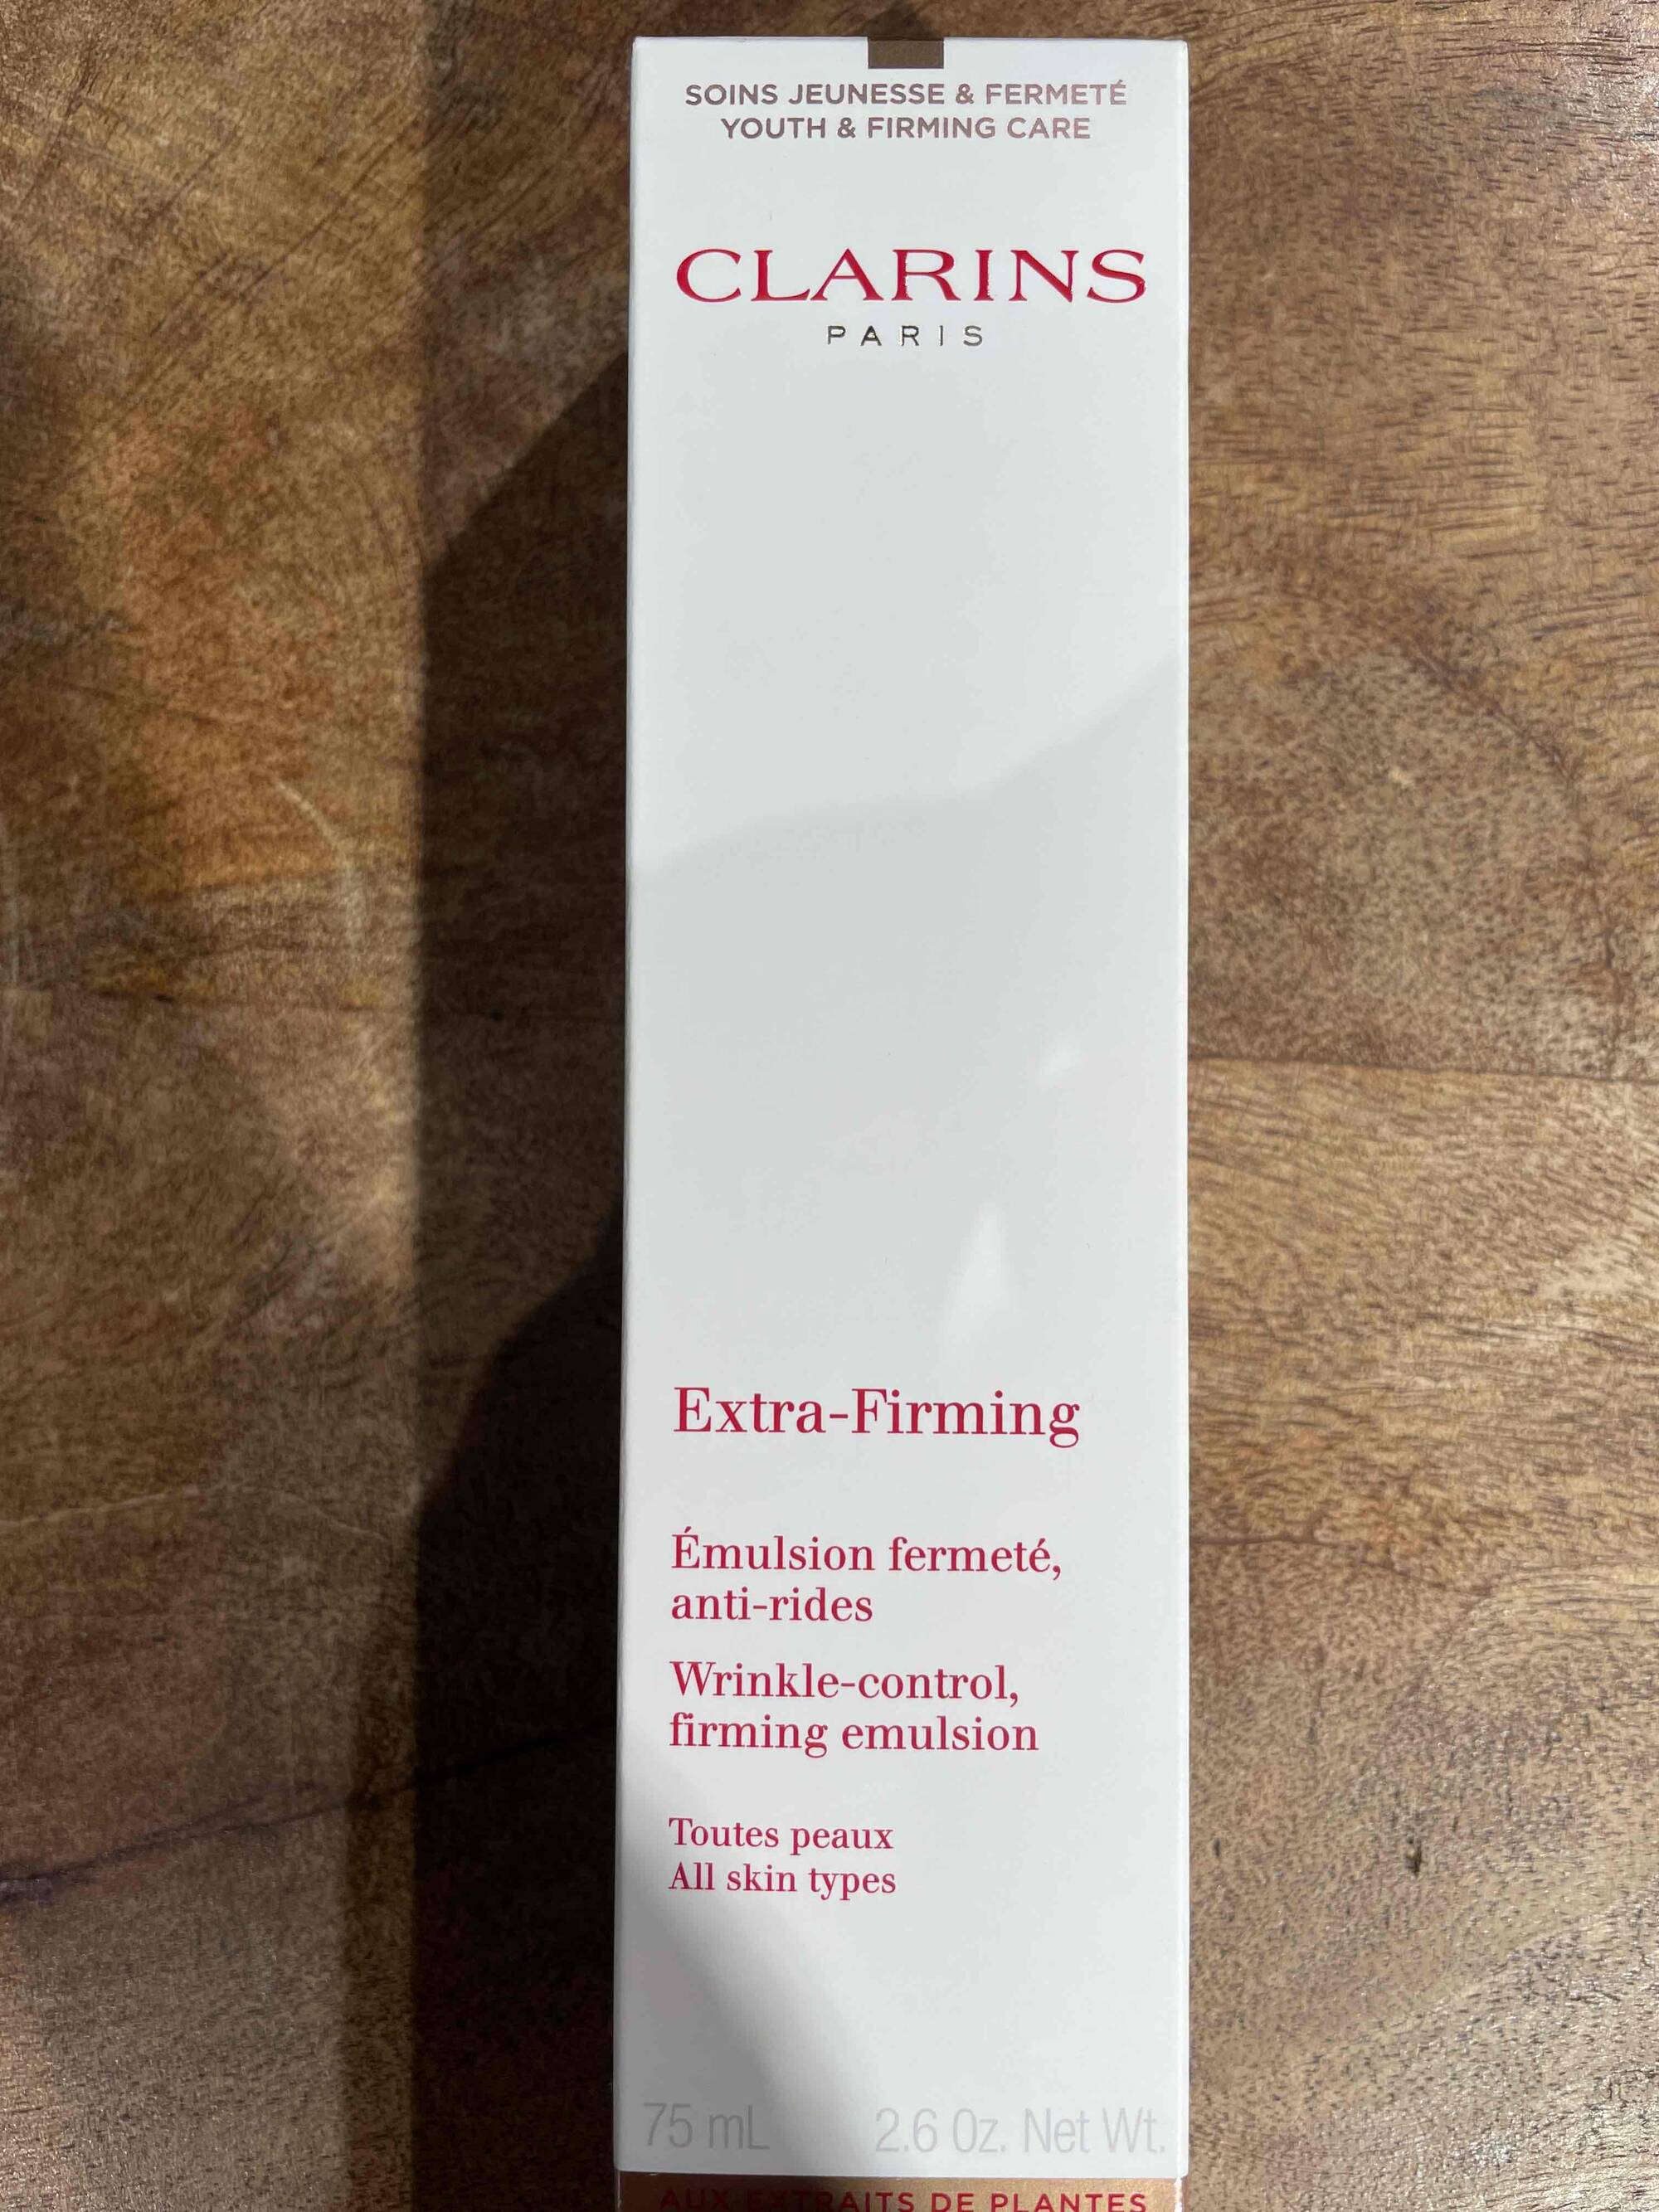 CLARINS - Extra firming - Émulsion fermeté anti-rides 